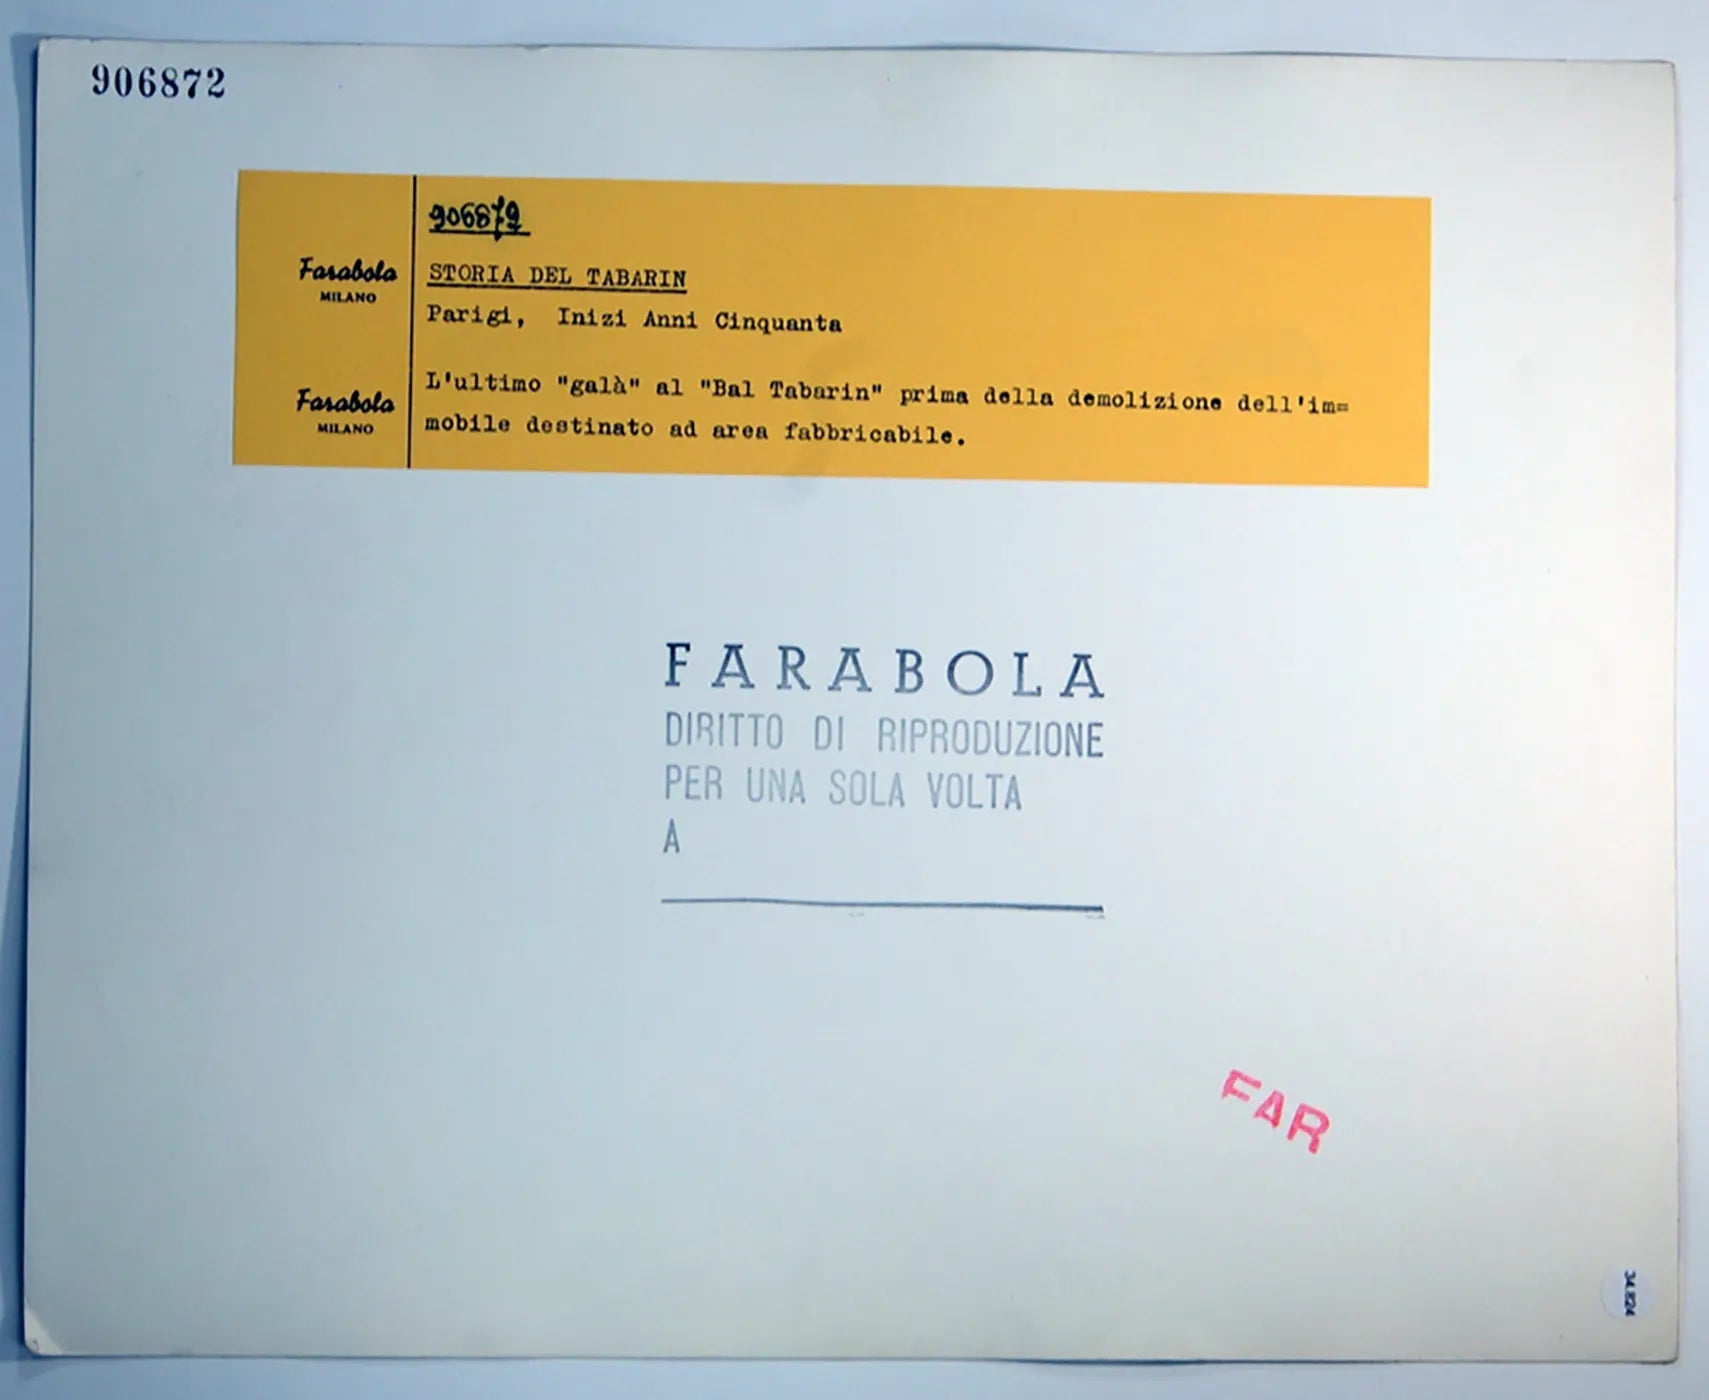 Parigi Ultimo gala al Bal Tabarin Ft 34824 - Stampa 30x24 cm - Farabola Stampa ai sali d'argento